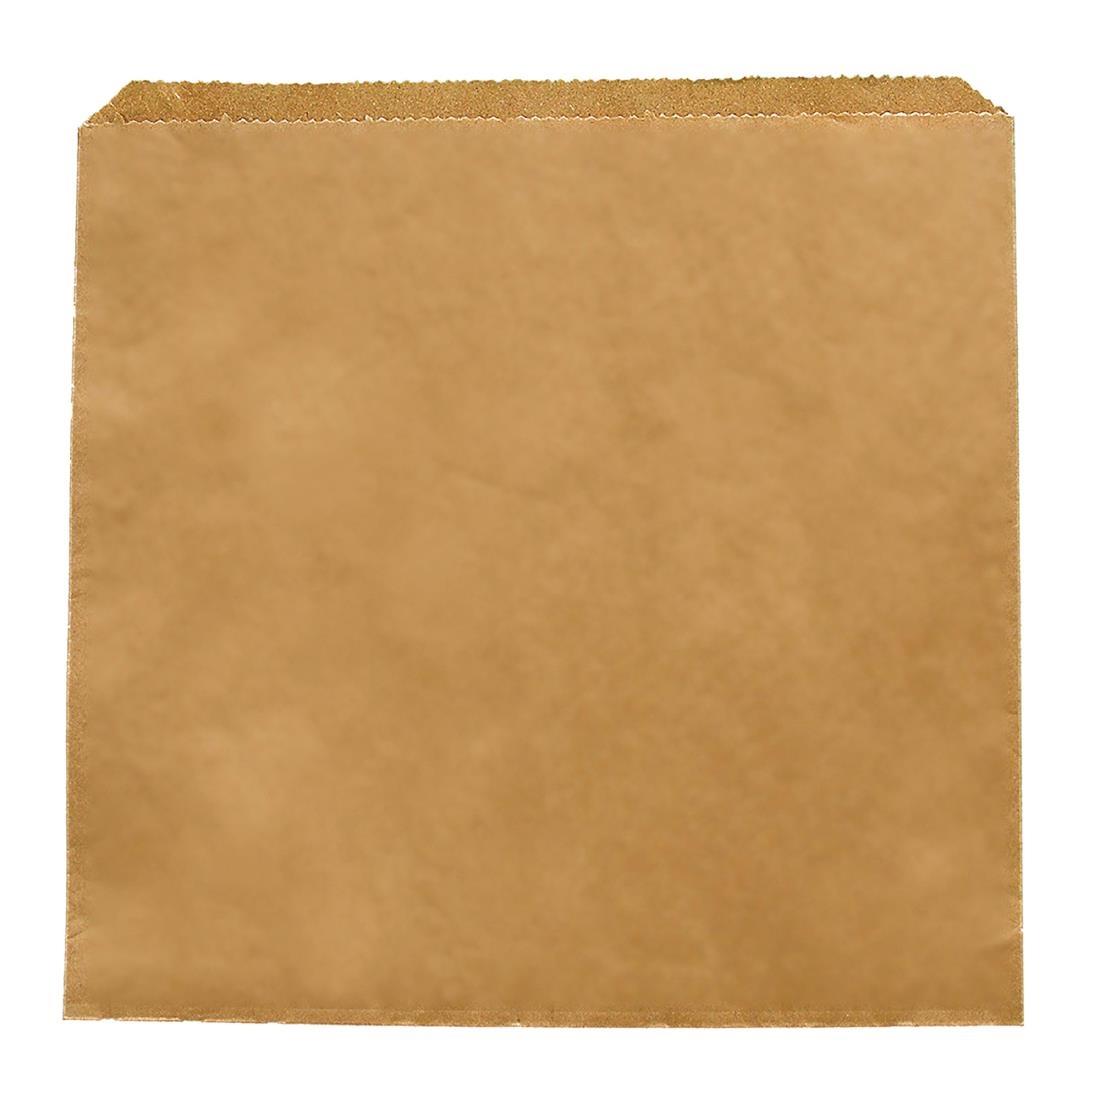 Vegware Compostable Kraft Sandwich Bags (Pack of 1000) - GH017  - 1